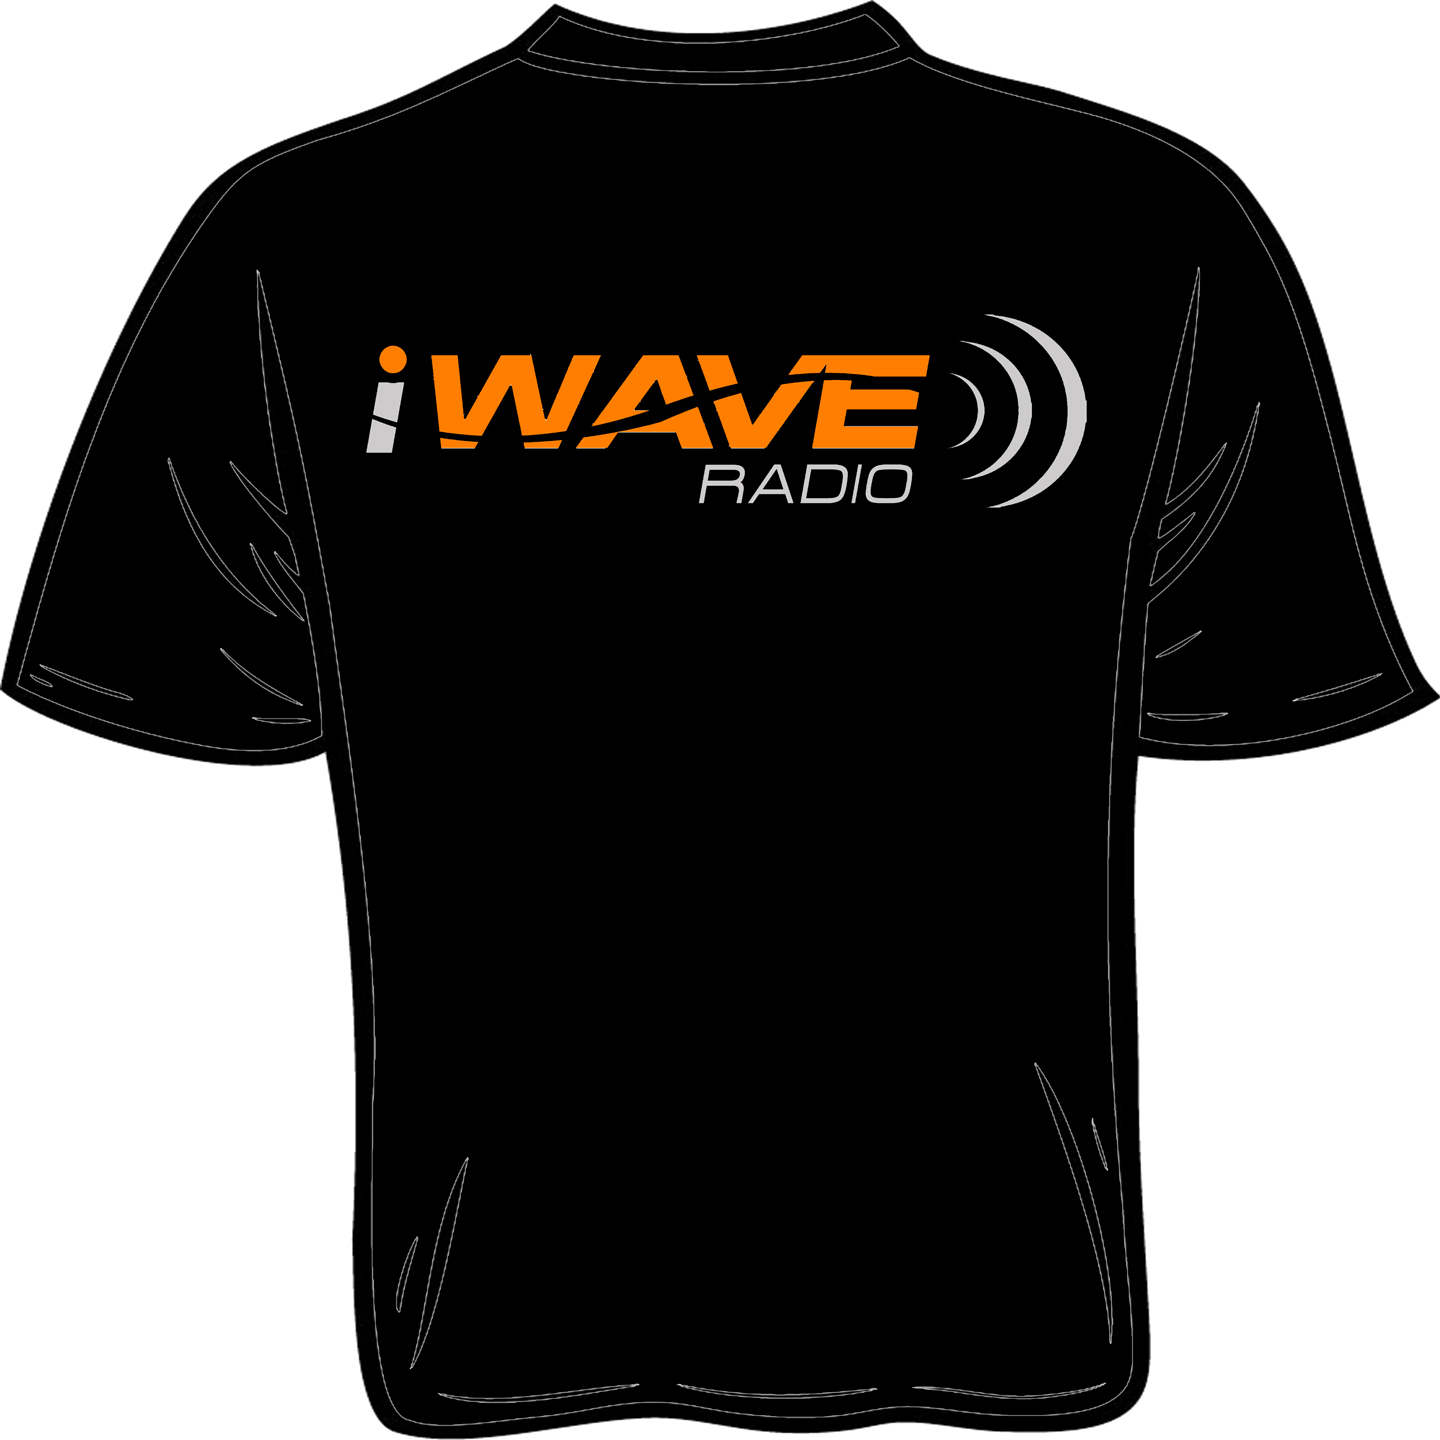 iwaveradio black T-shirt with i